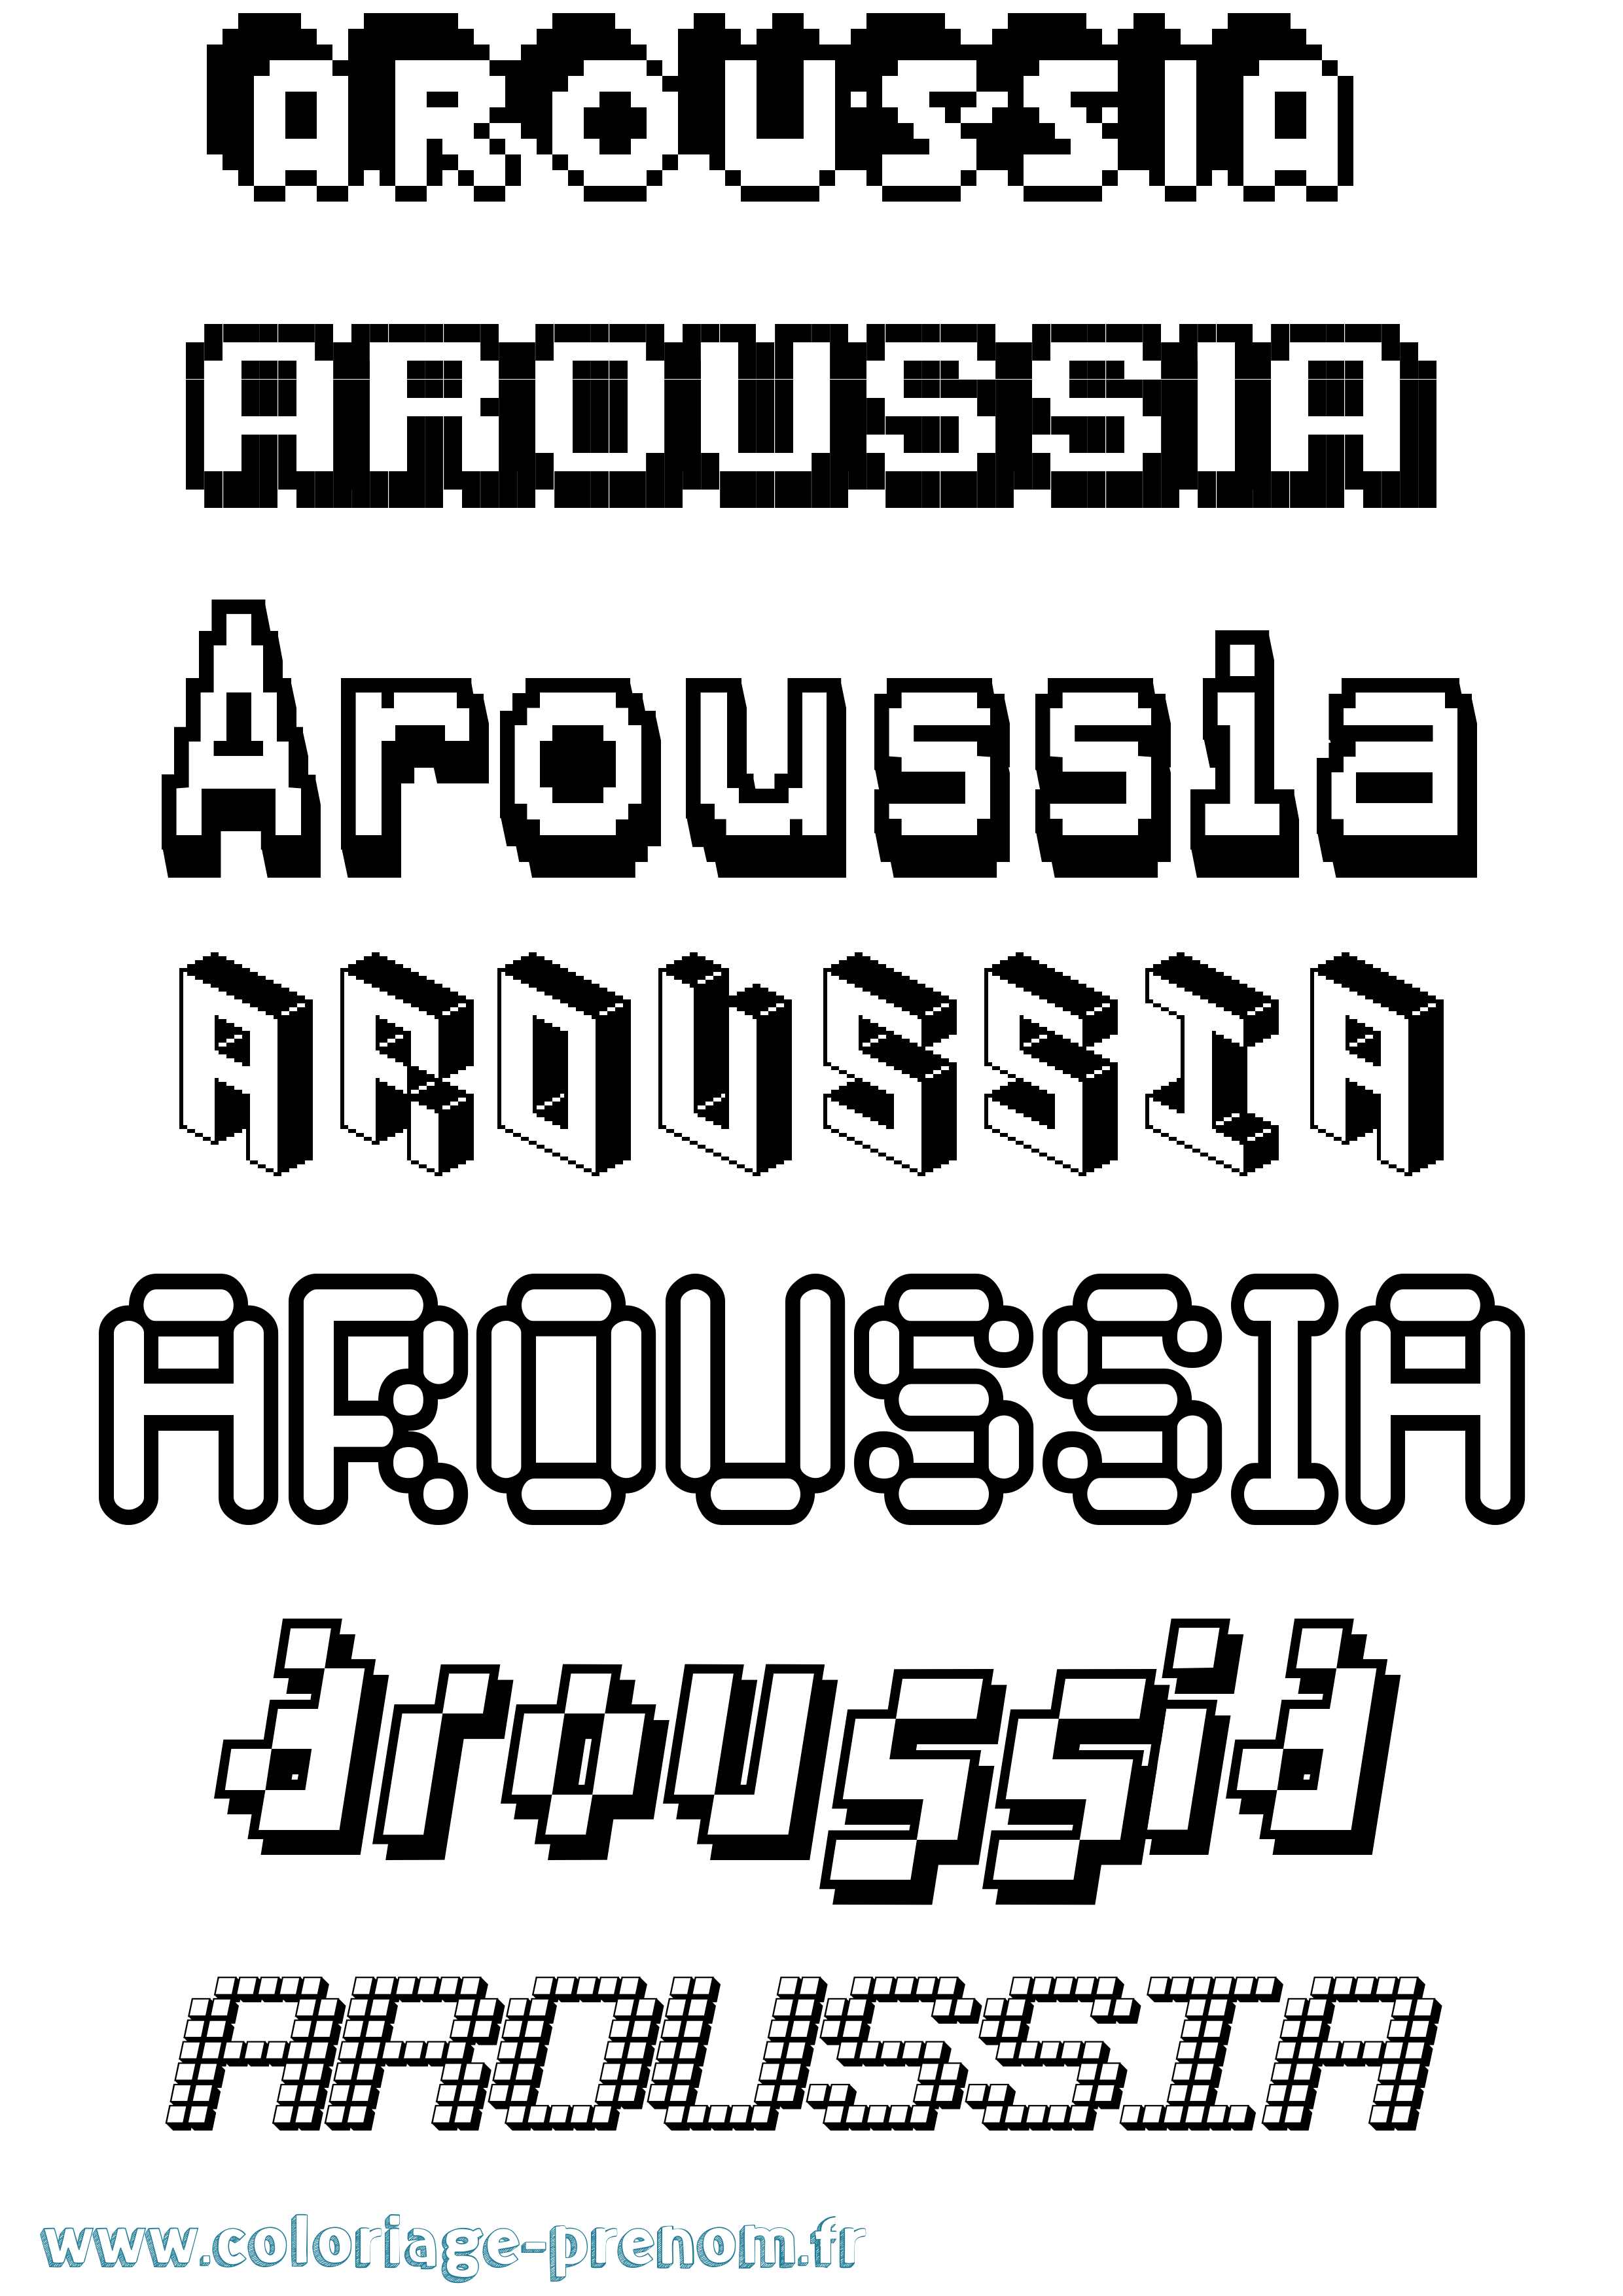 Coloriage prénom Aroussia Pixel